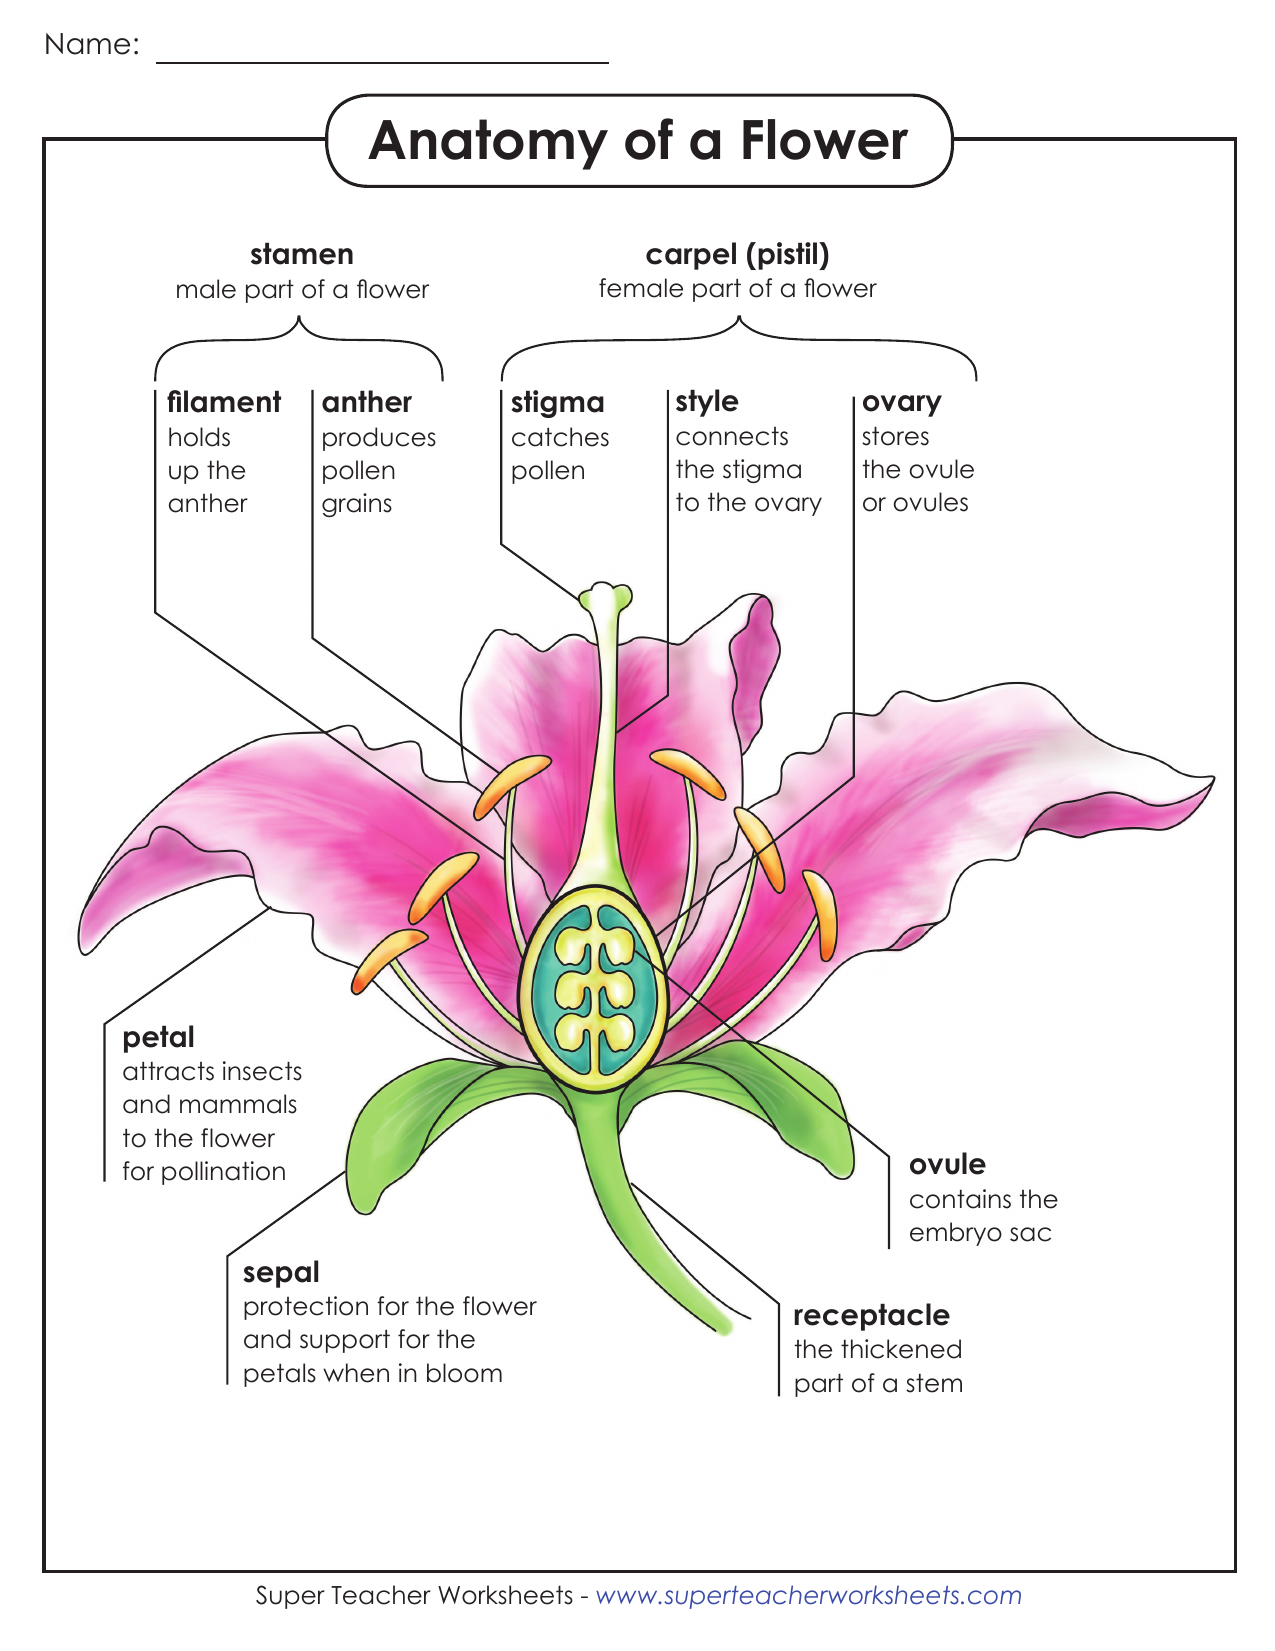 Flower anatomy ANZBH